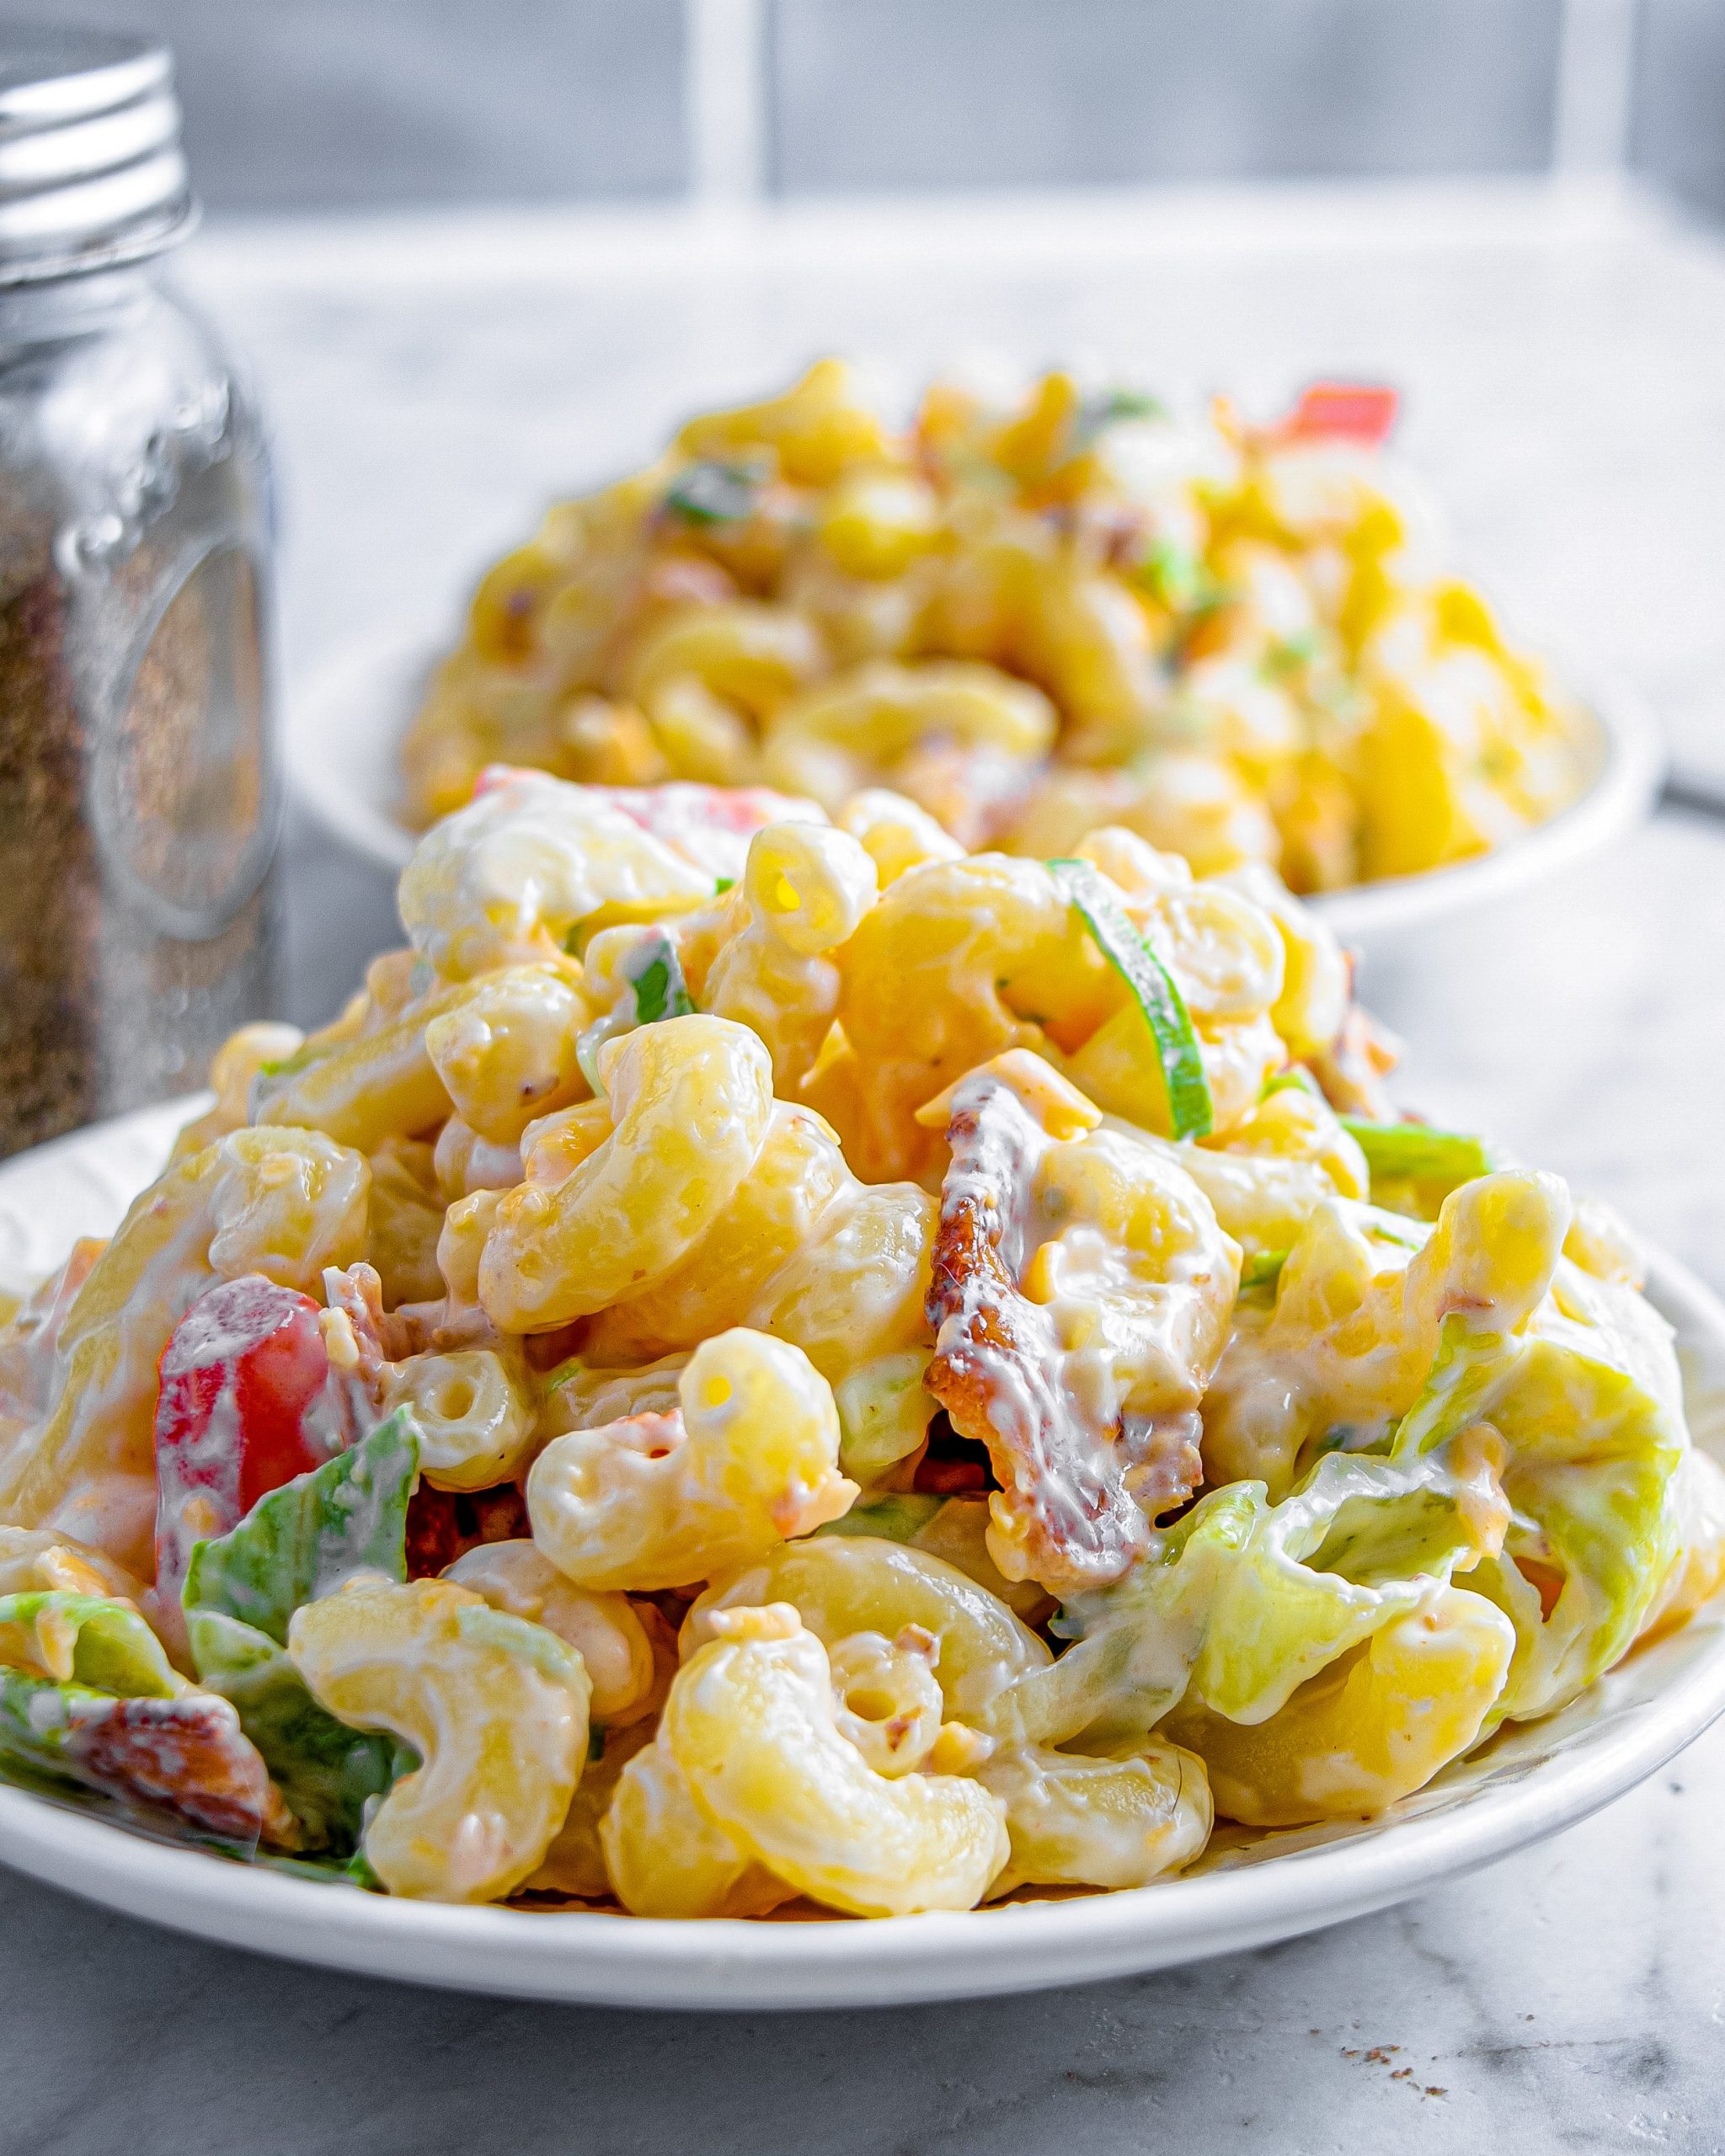 blt pasta salad, blt salad with pasta, pasta salad spinach